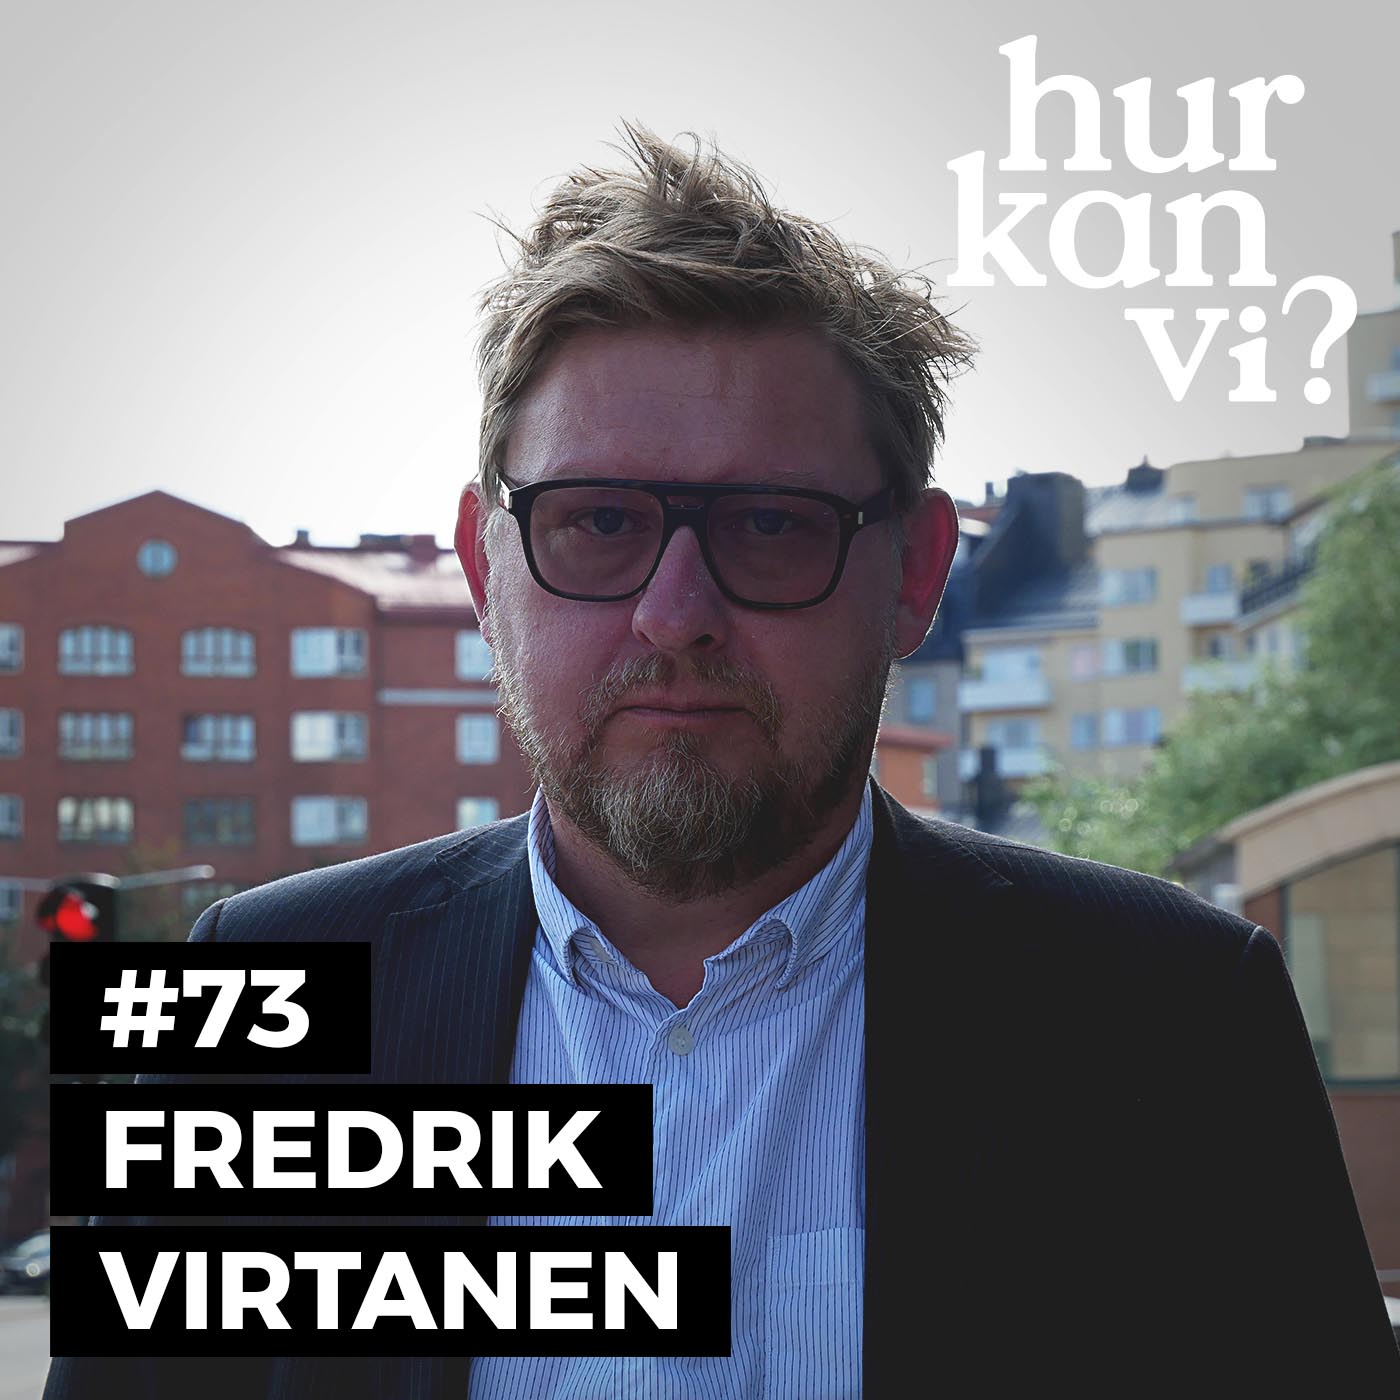 #73 Fredrik Virtanen